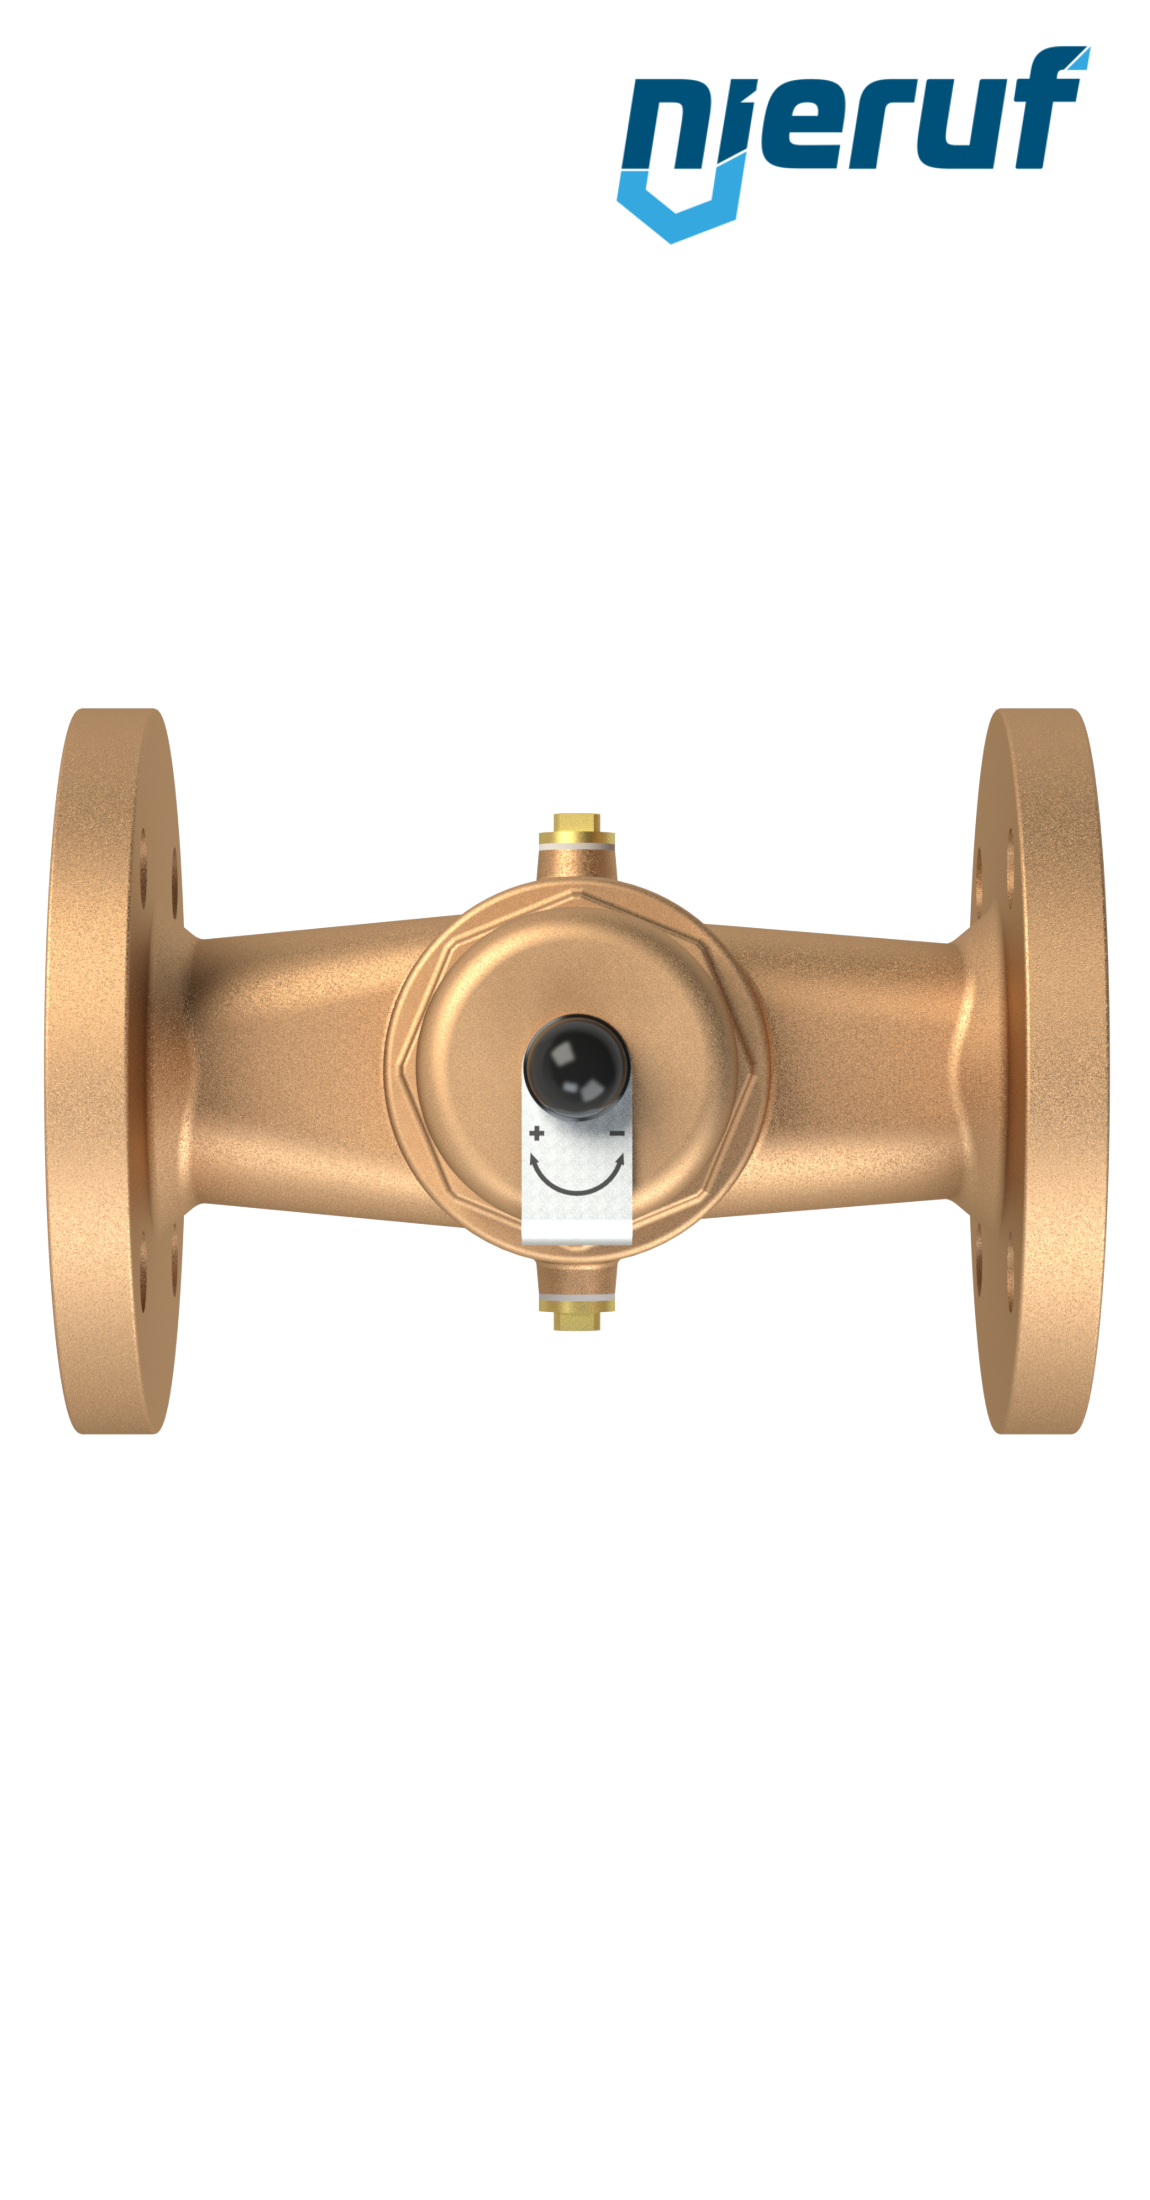 Flange-pressure reducing valve DN 20 PN40 DM05 gunmetal/brass EPDM 5.0 - 15.0 bar